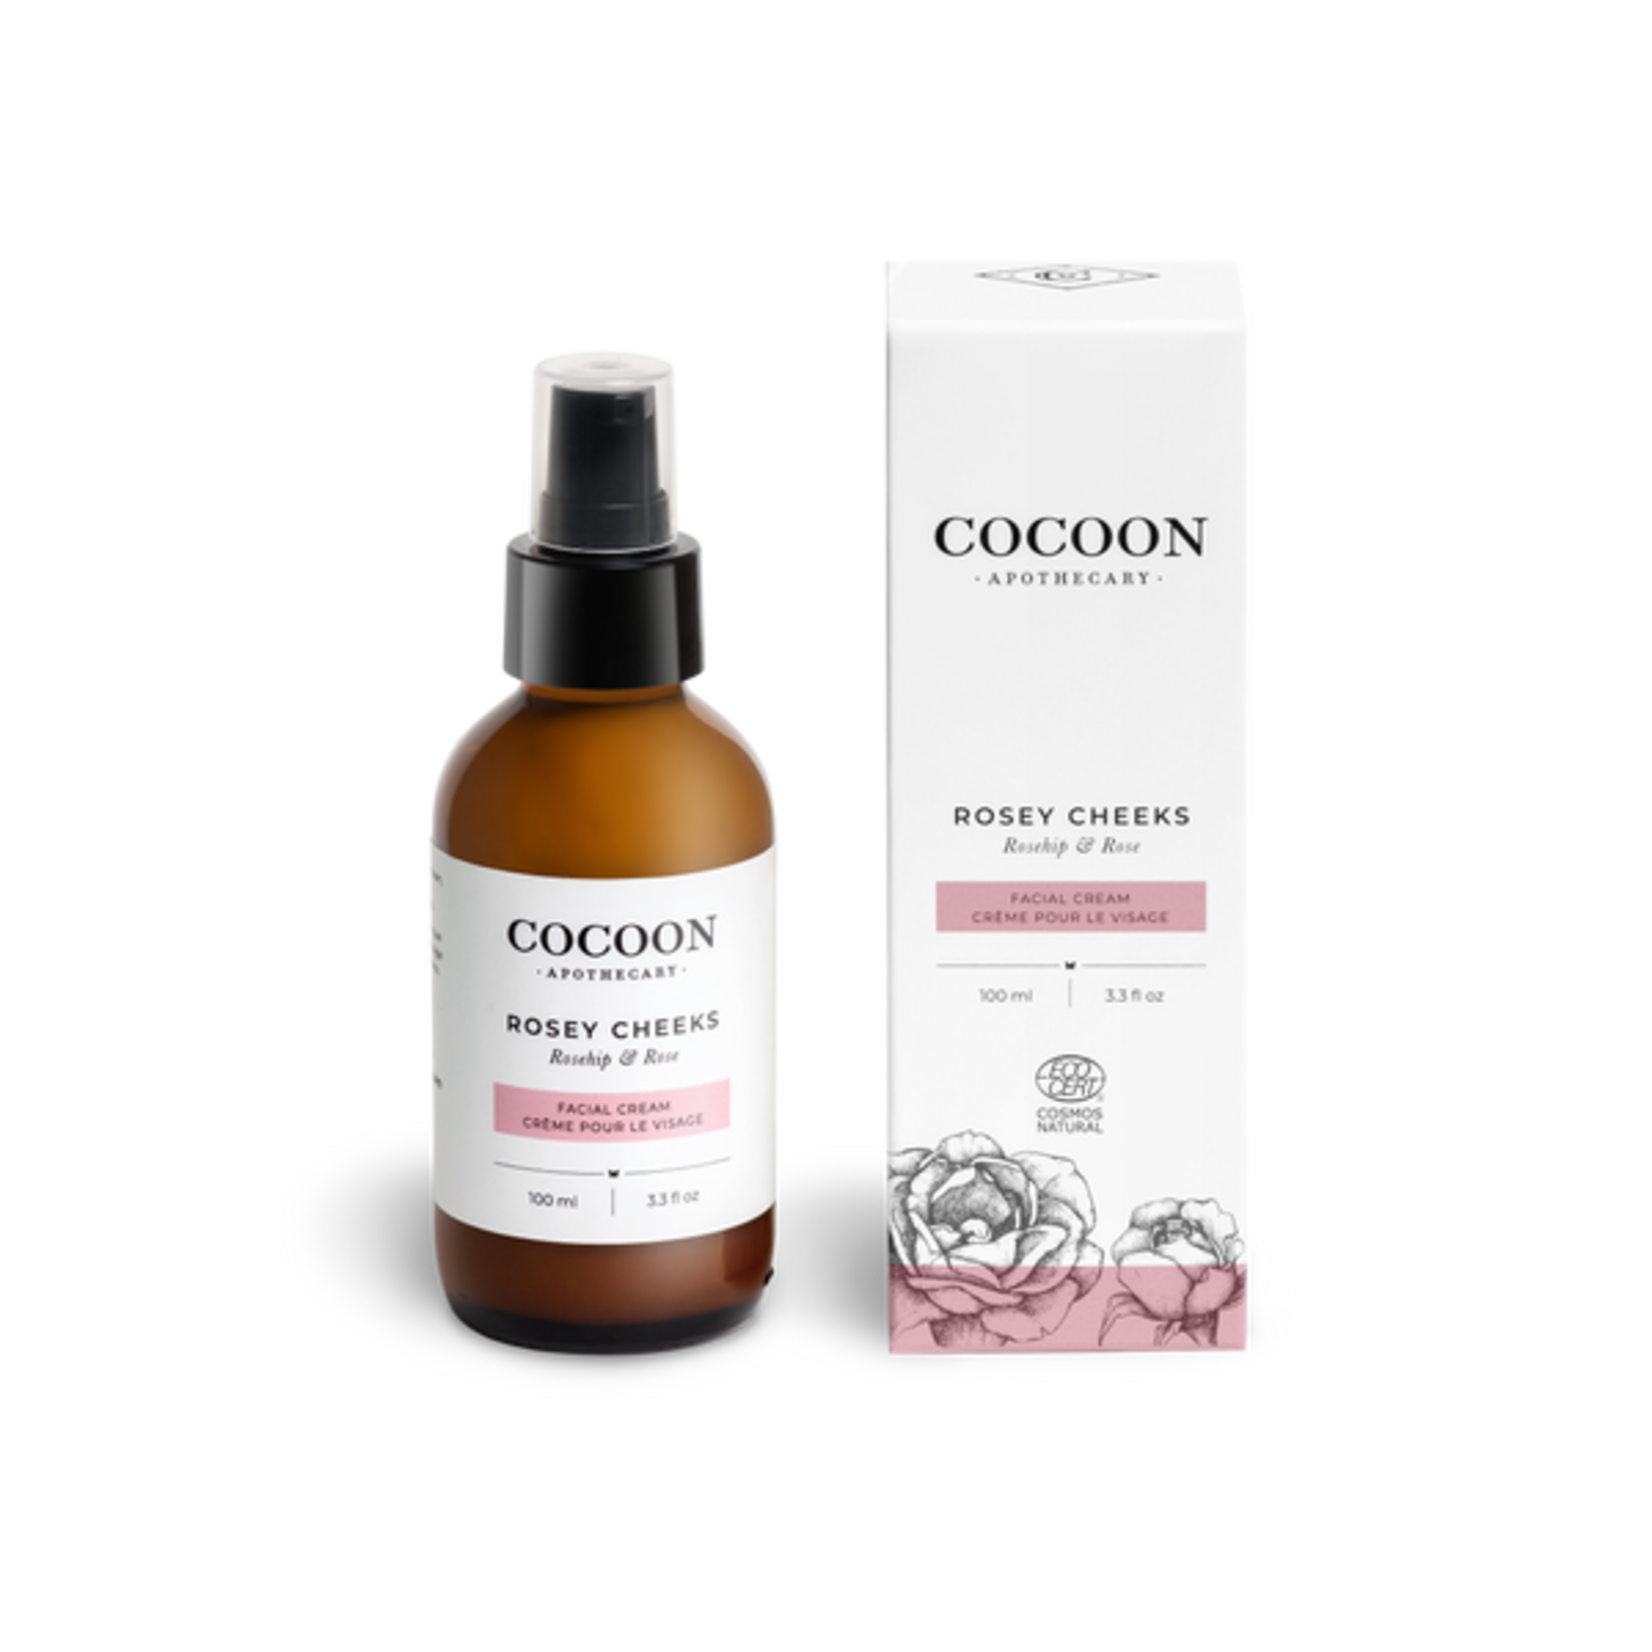 Cocoon Rosey Cheeks Facial Cream